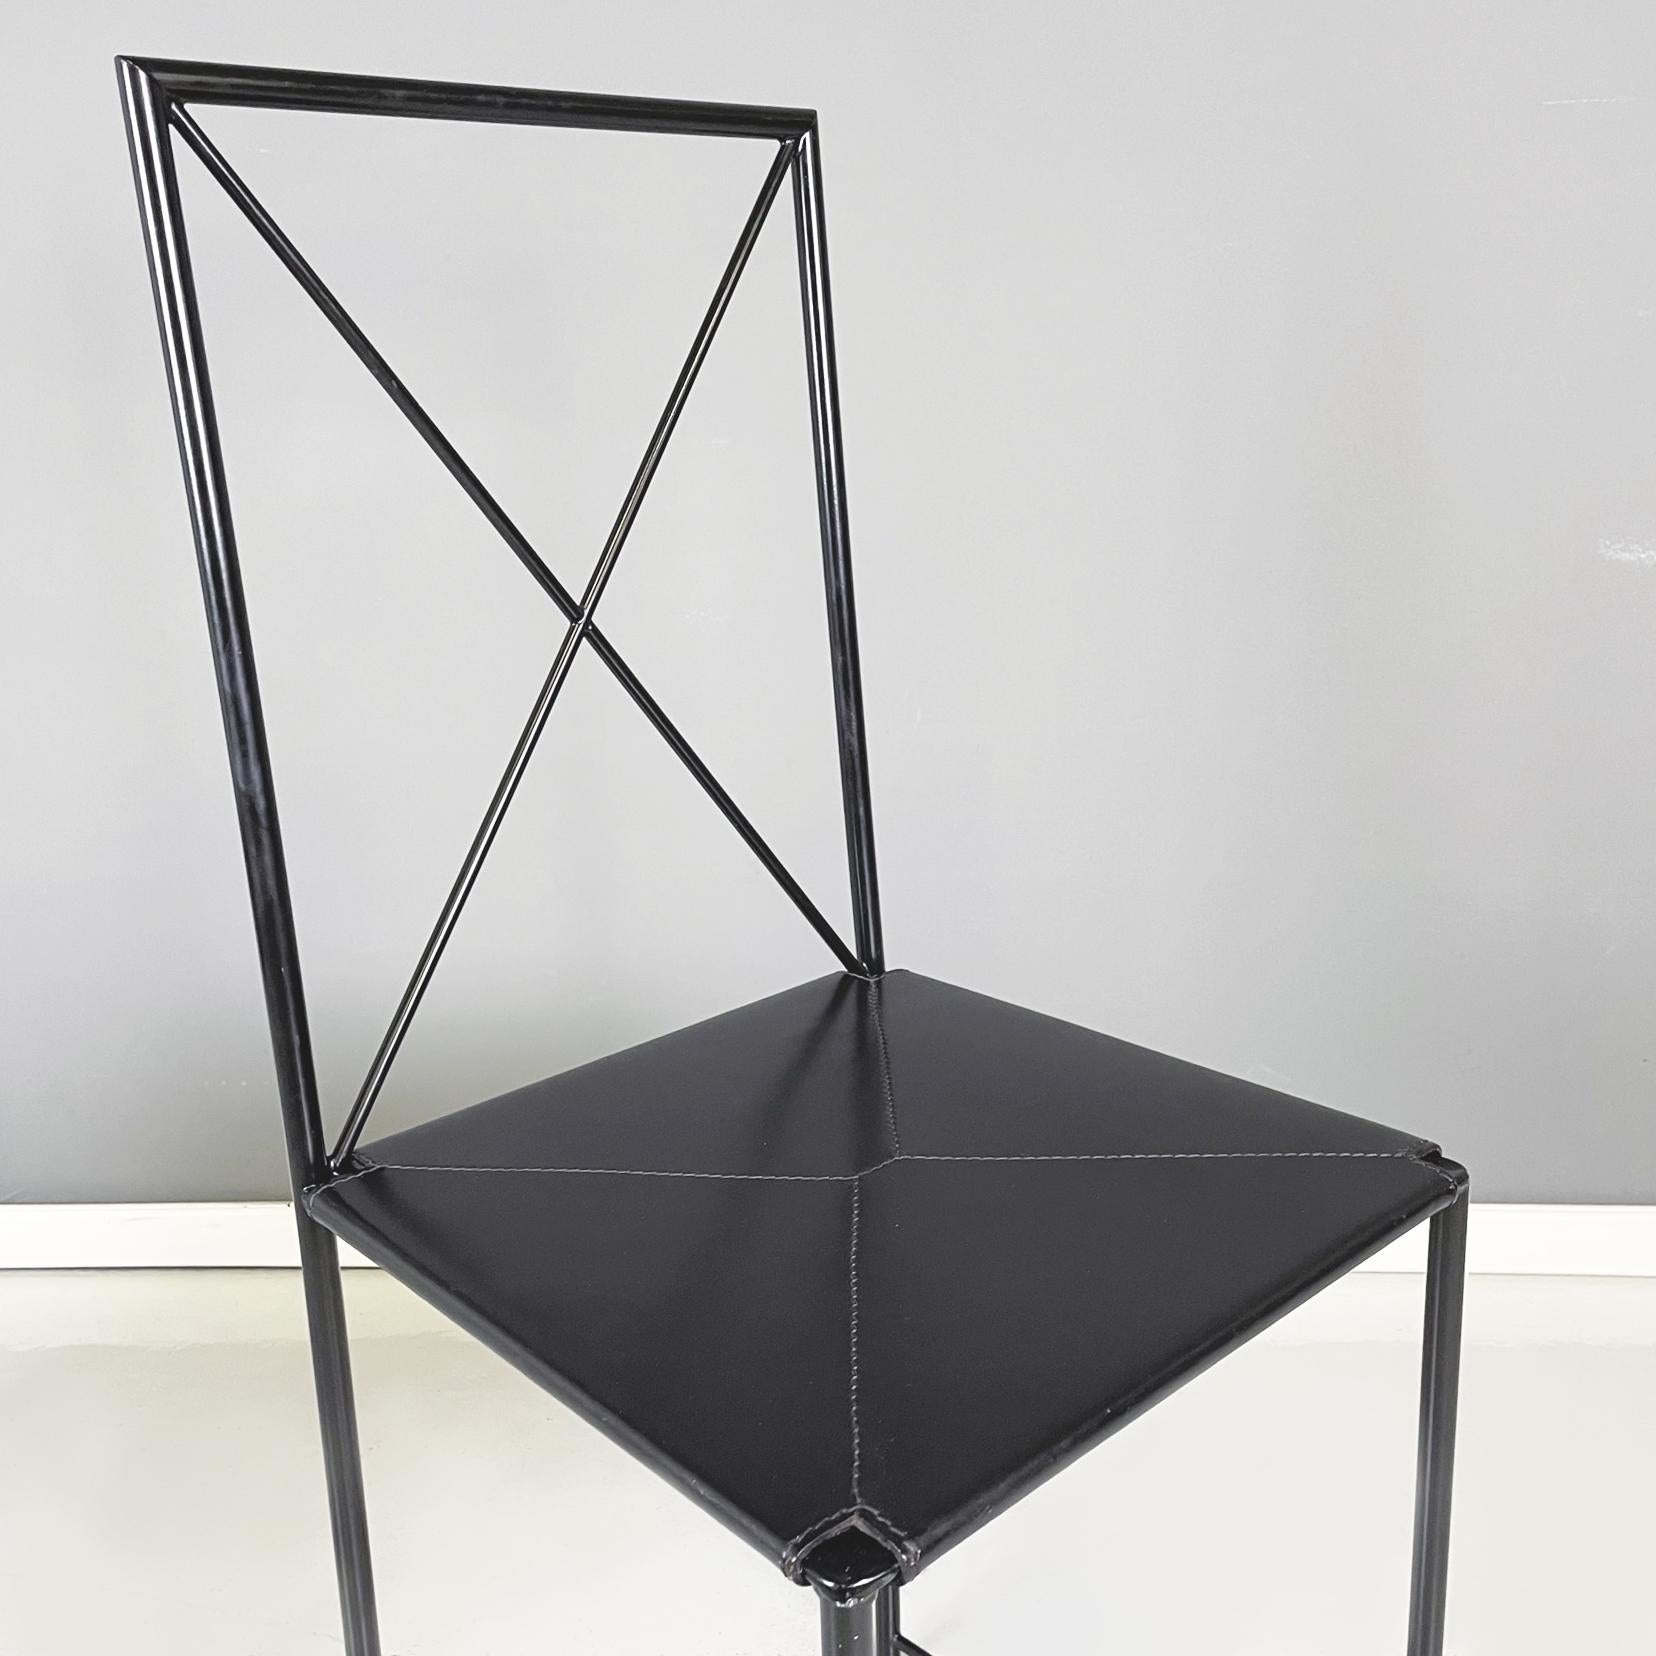 Italian Modern Black Metal Leather Chairs Moka by Asnago Vender Flexoform, 1939 For Sale 1